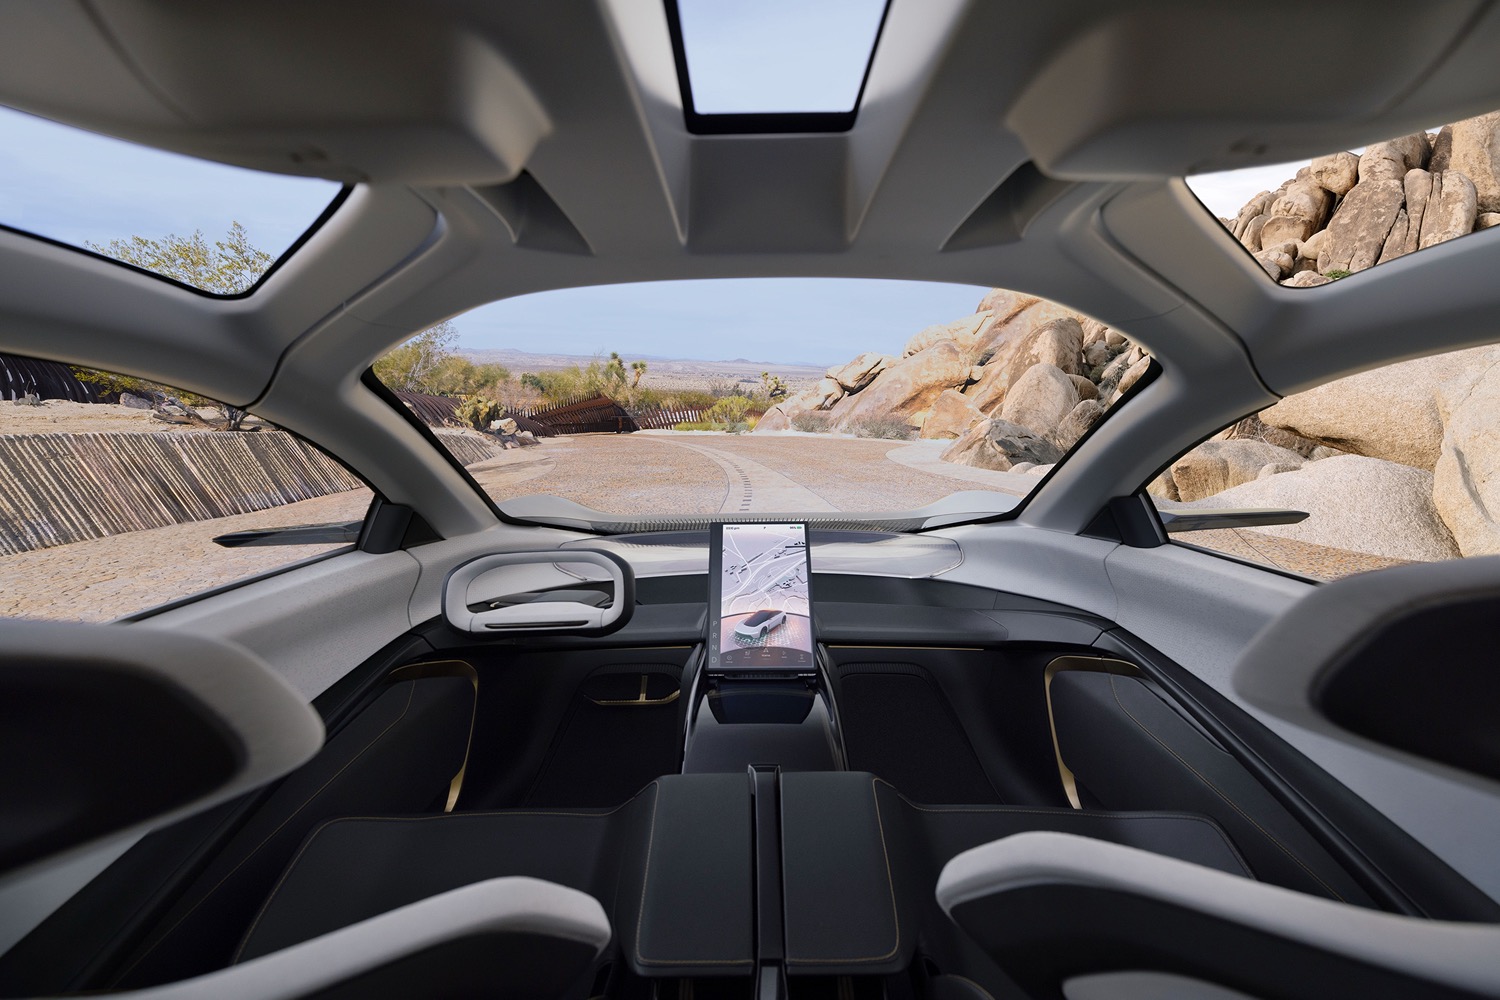 Interior of the Chrysler Halcyon concept.